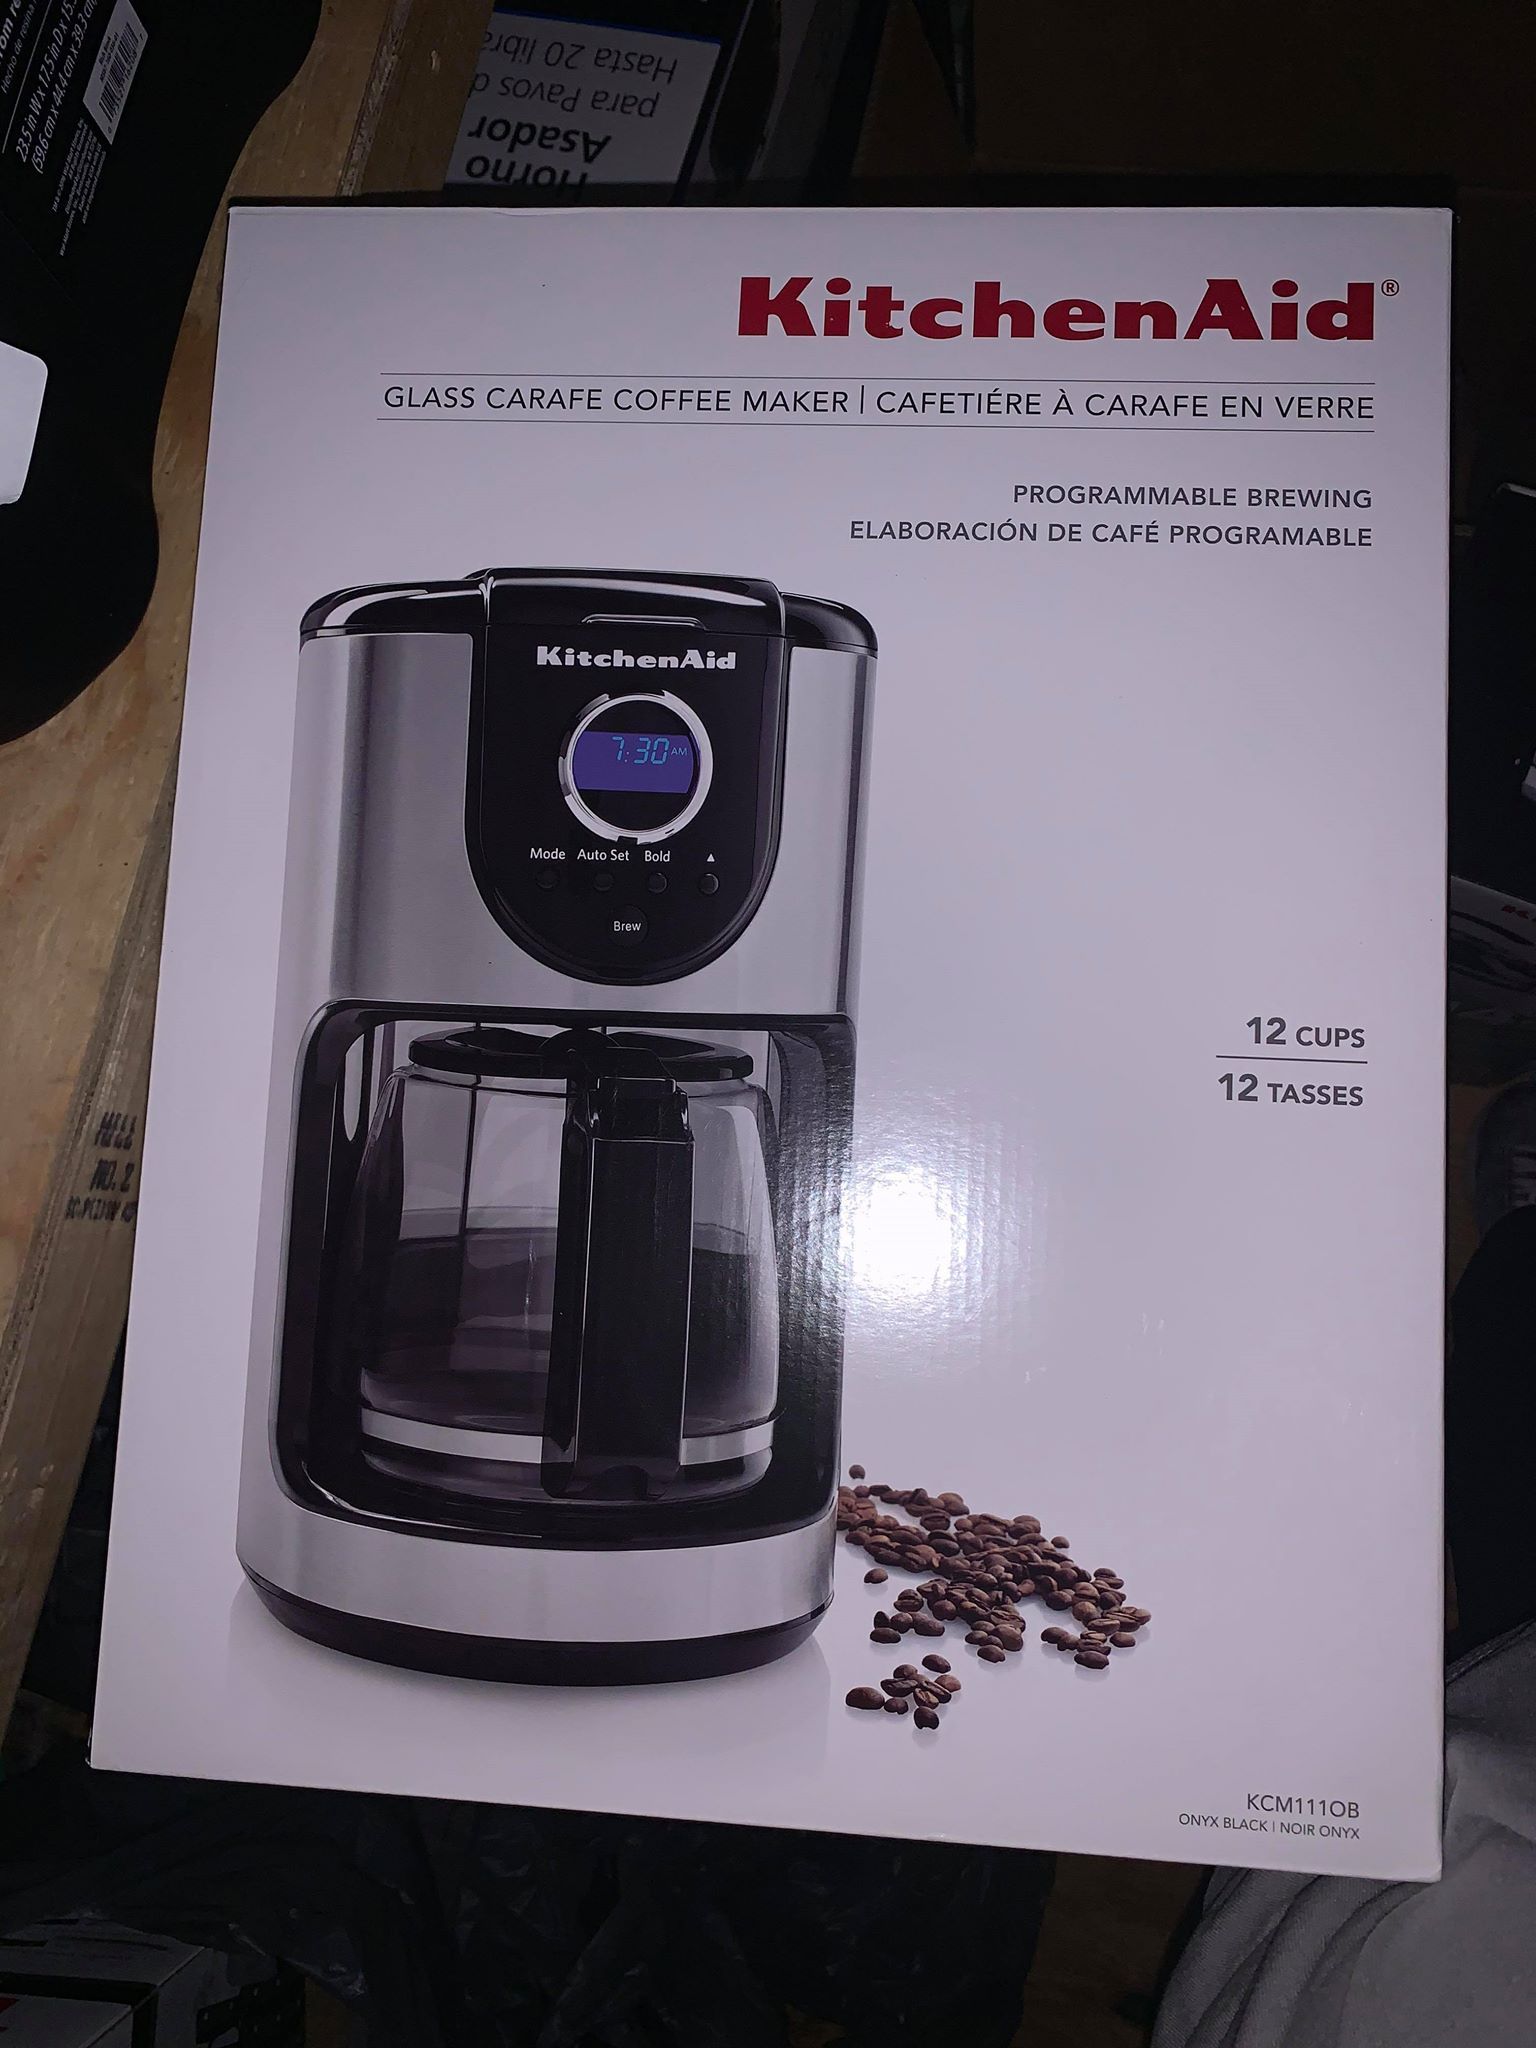 KitchenAid 2-Cup Glass Carafe Coffee Maker -Brand New - $90 obo